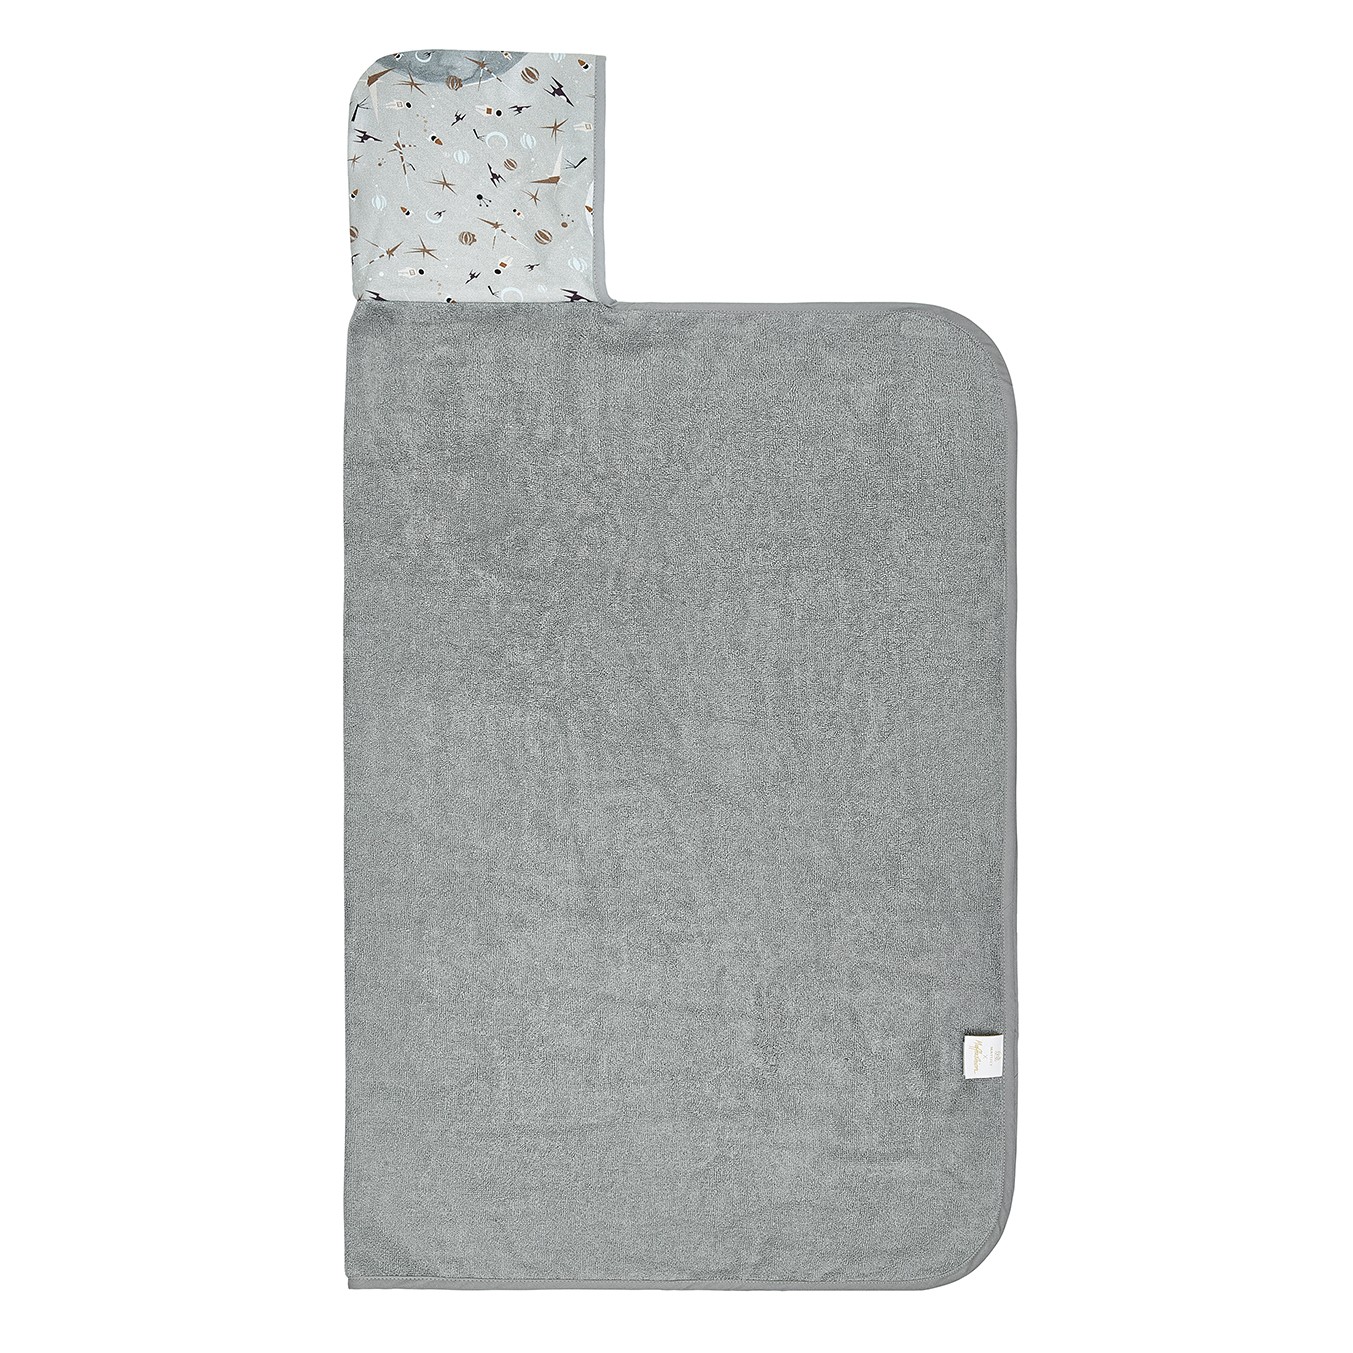 Bamboo hooded towel - by Maffashion - grey